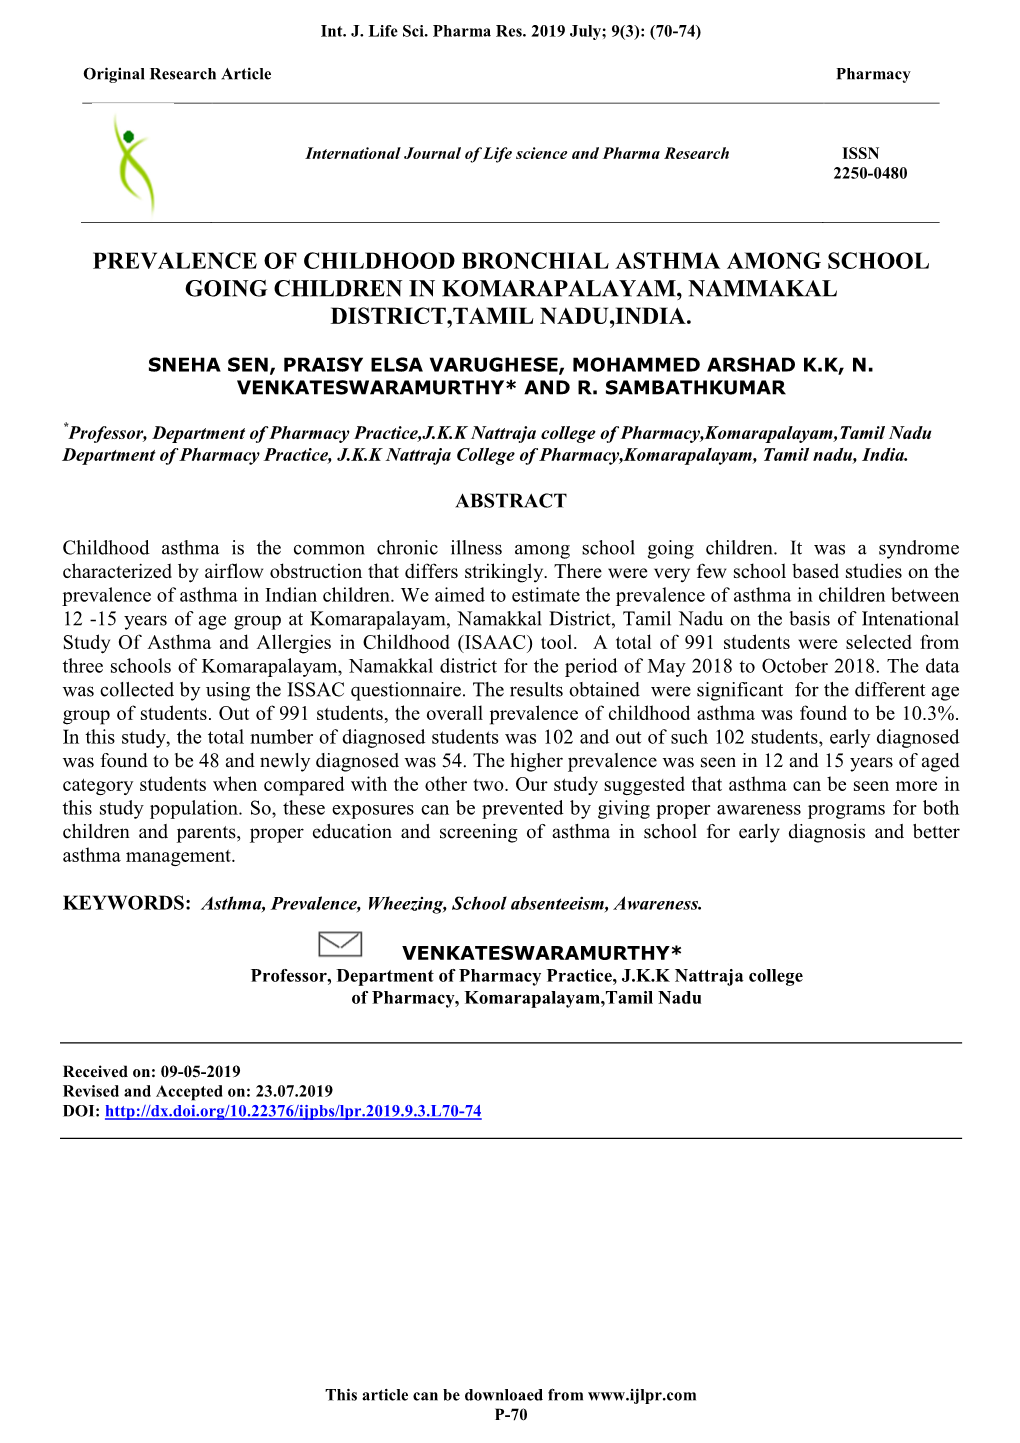 Prevalence of Childhood Bronchial Asthma Among School Going Children in Komarapalayam, Nammakal District,Tamil Nadu,India